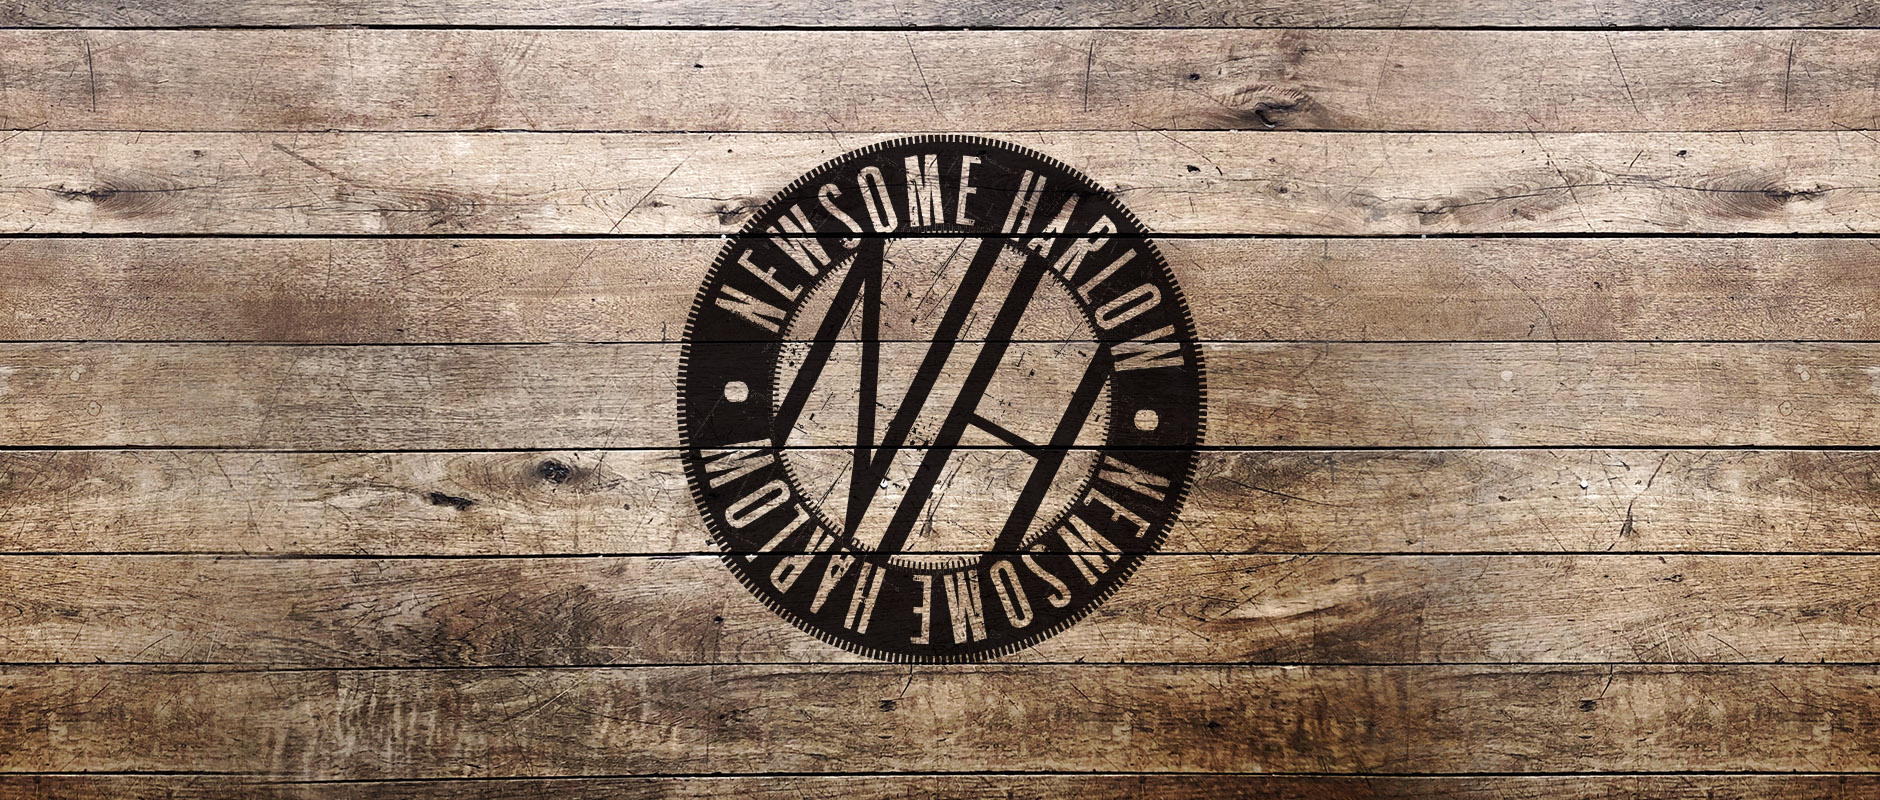 Newsome harlow - logo Design